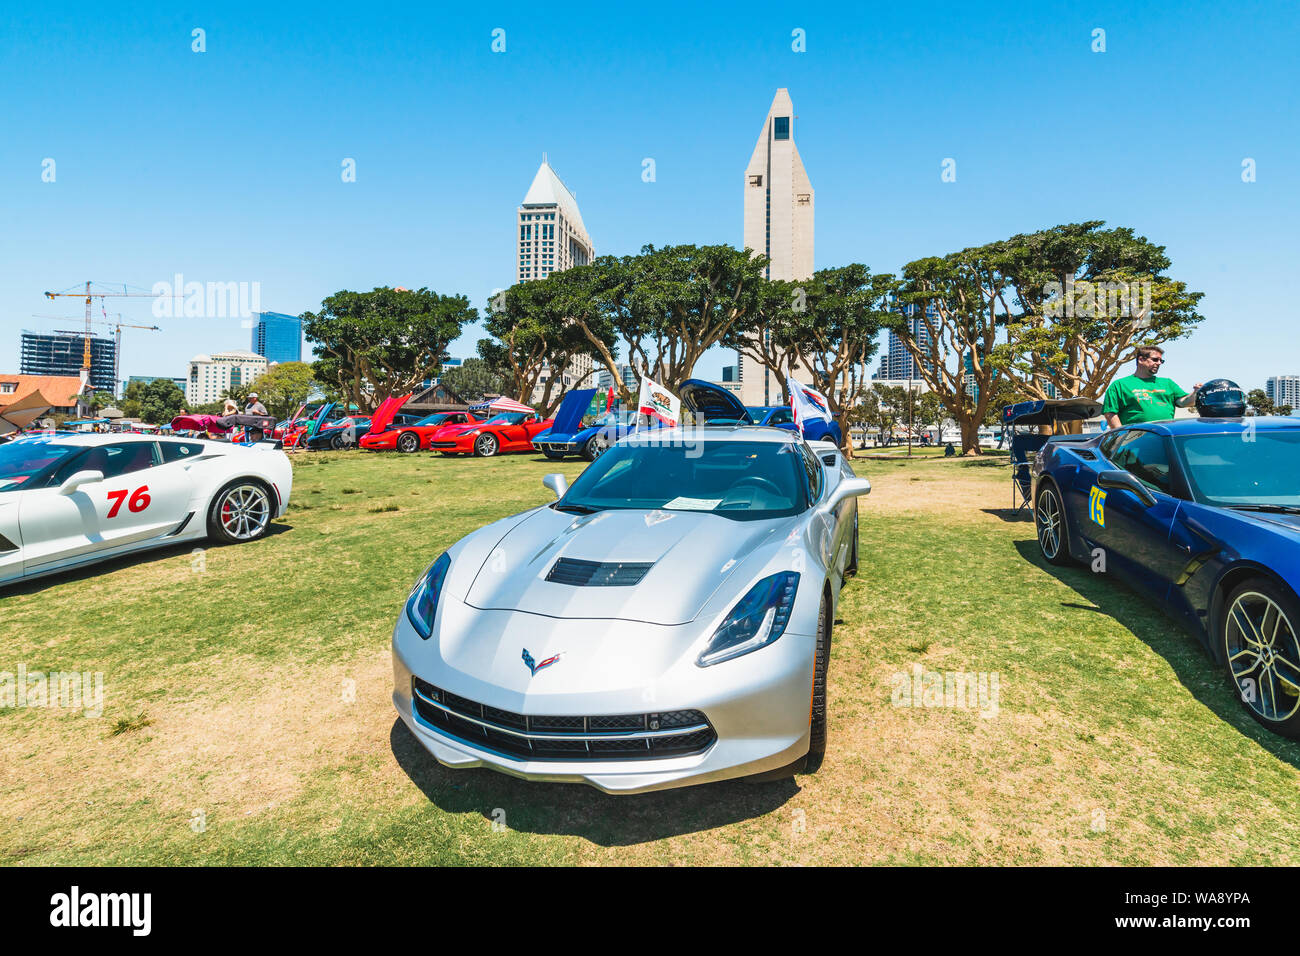 San Diego/USA - August 11, 2019 Main Street America Corvette Car Show in Marina Park North - Seaport Village in San Diego, California Stock Photo